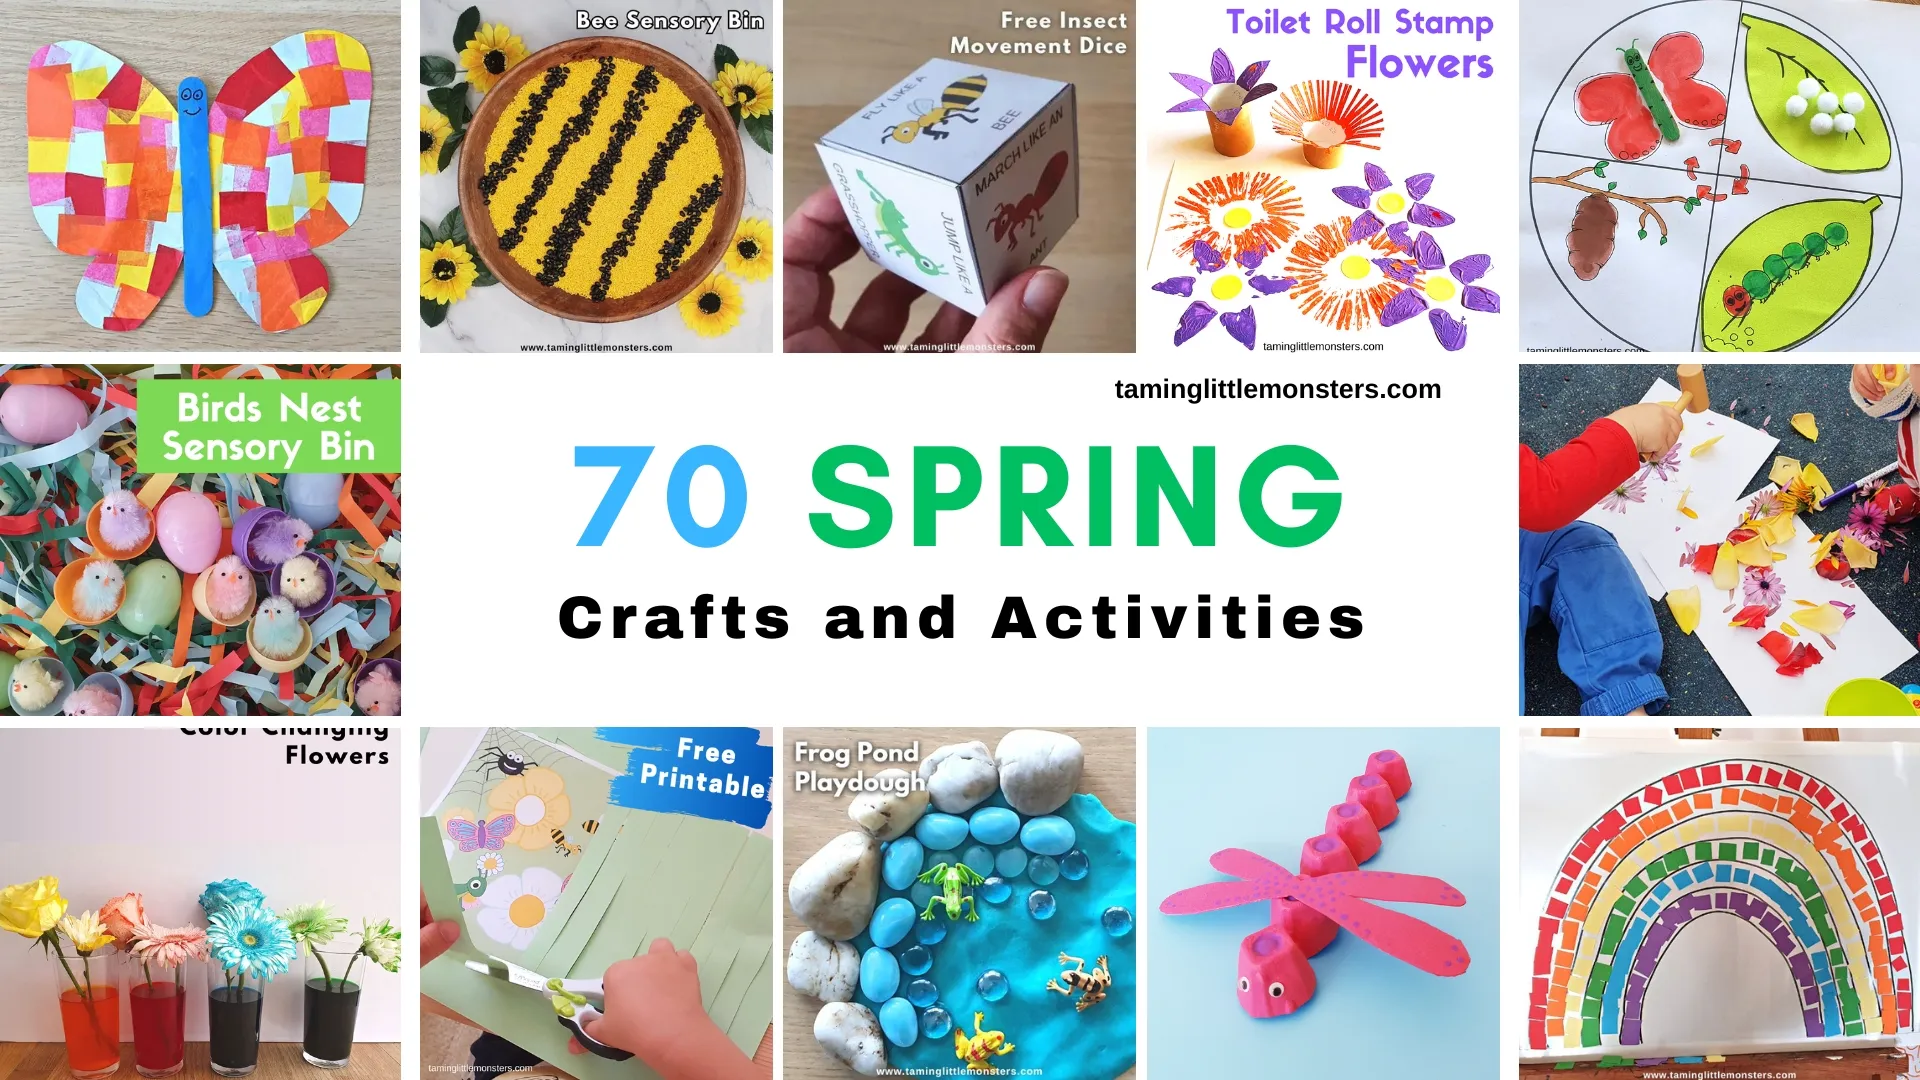 Toilet Roll Flower Stamps - Spring Art for Kids - Taming Little Monsters   Spring crafts preschool, Preschool arts and crafts, Spring arts and crafts